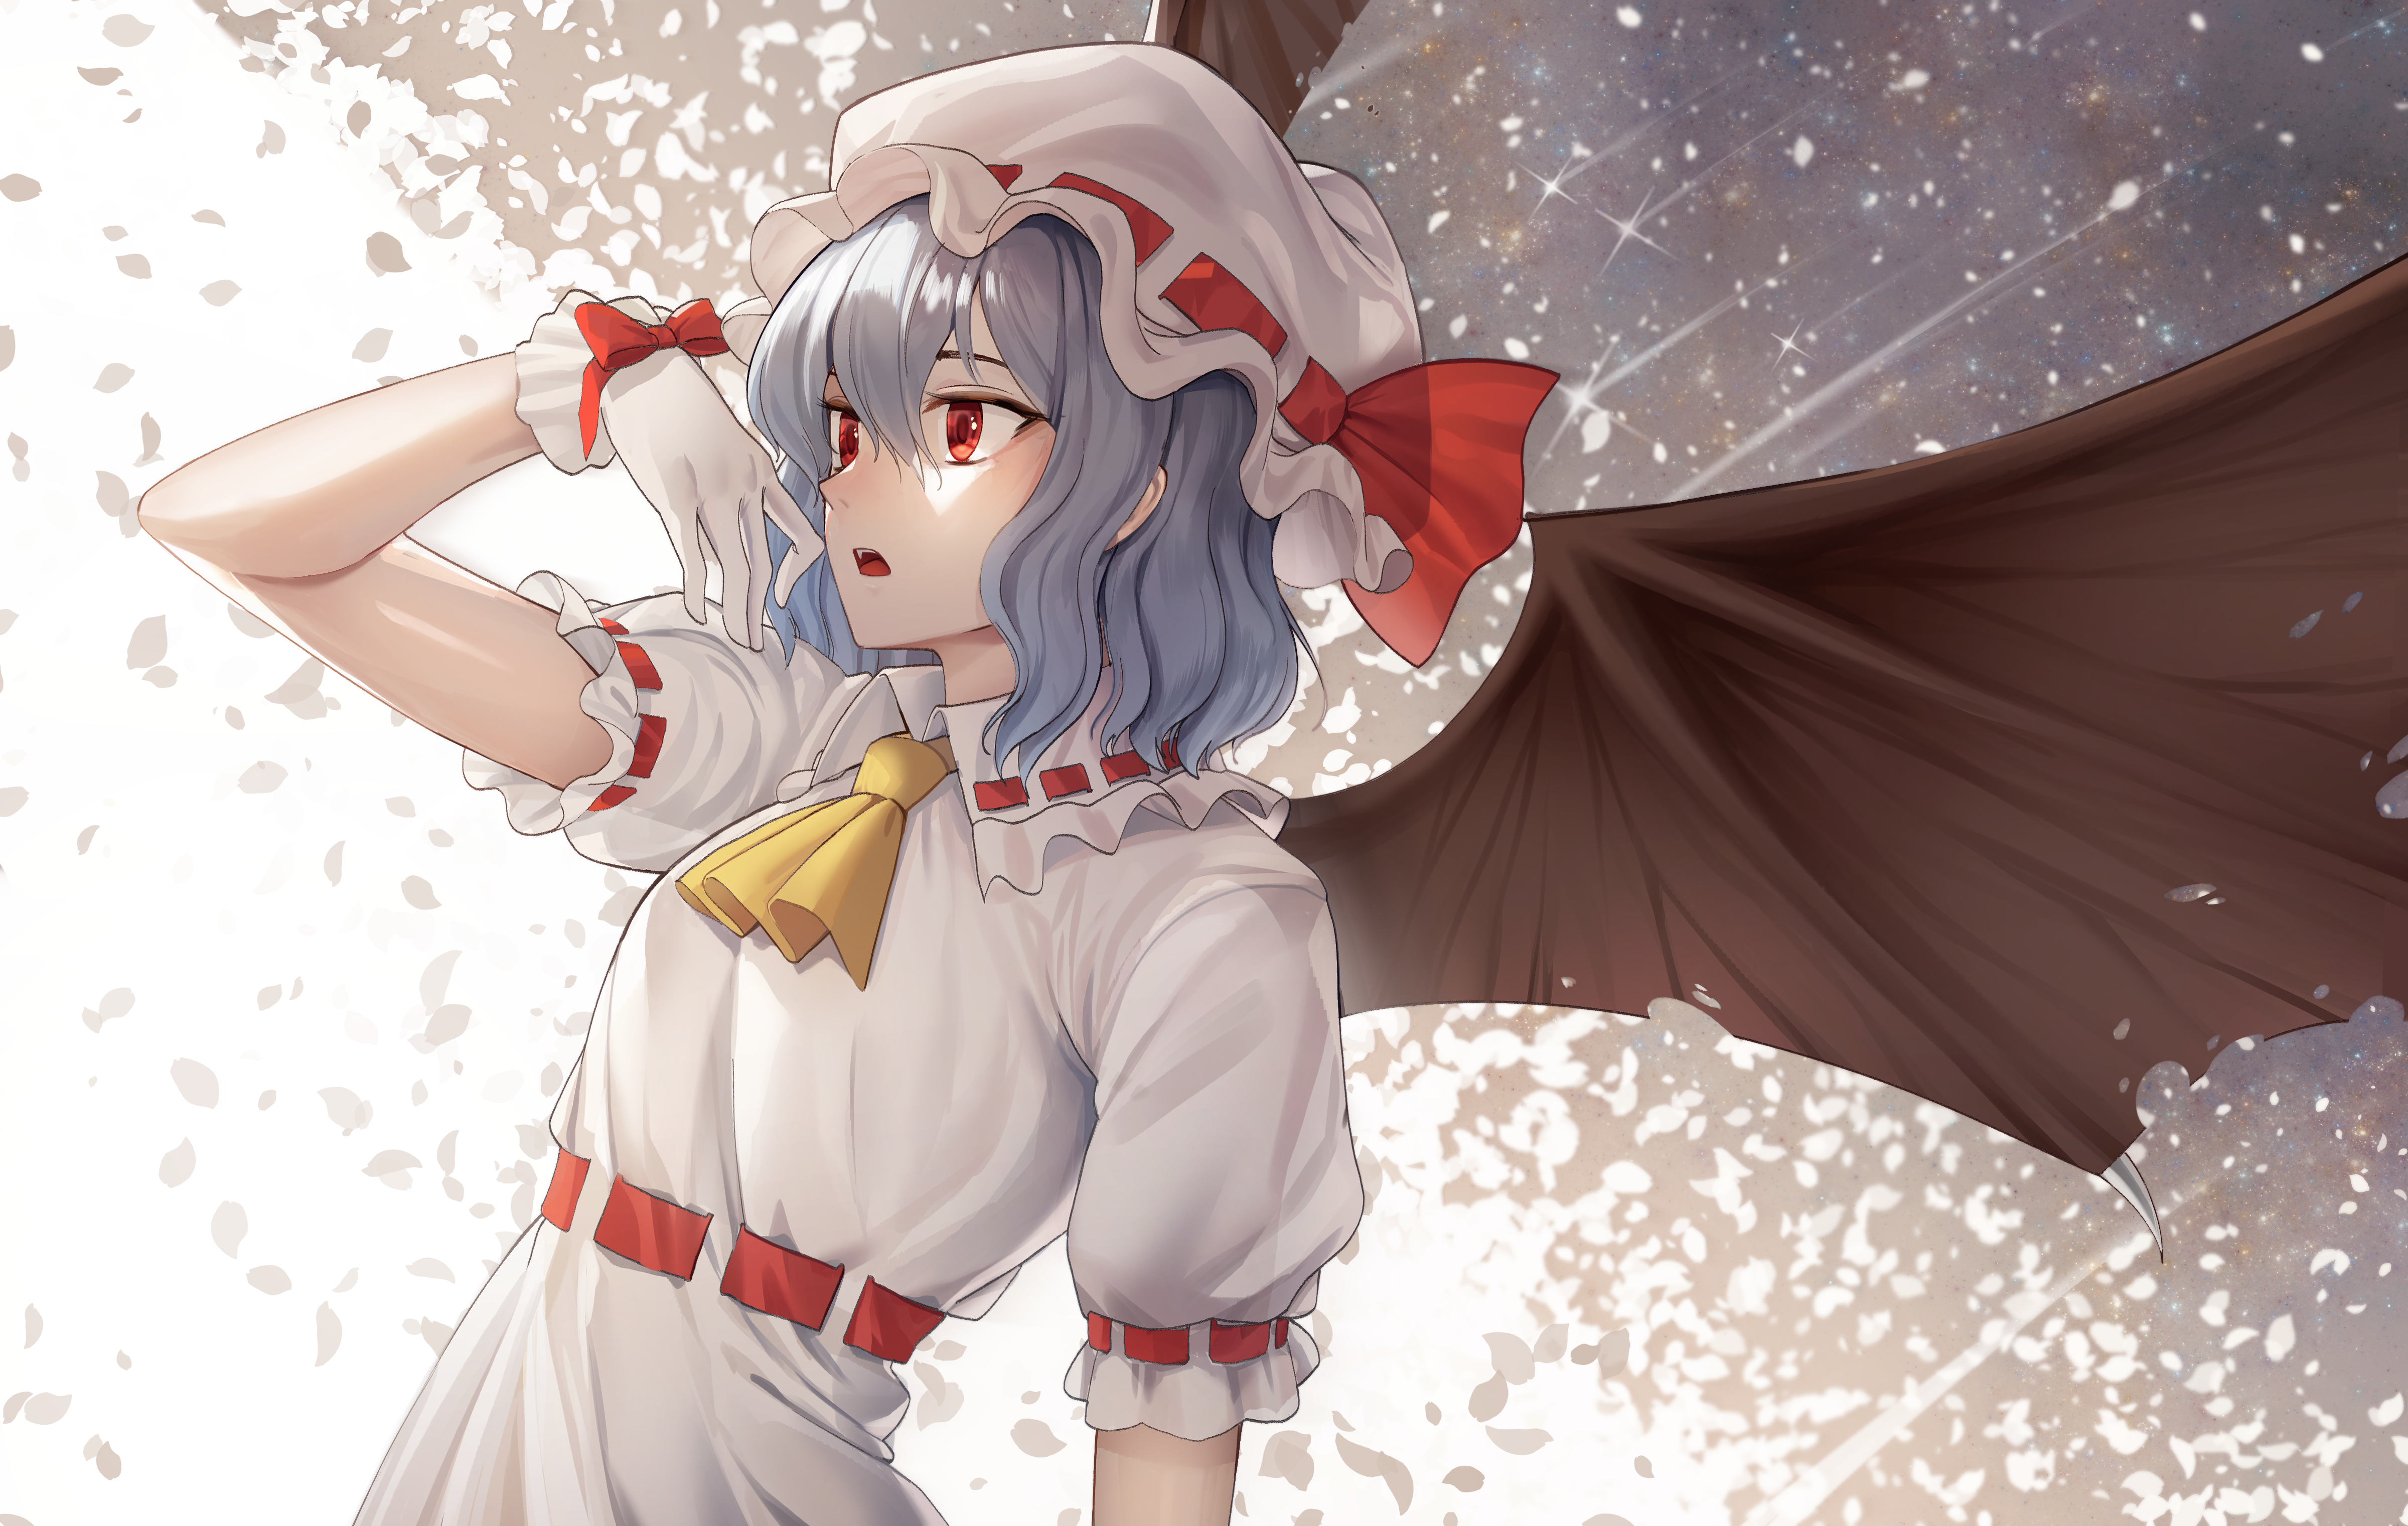 Goback Touhou Remilia Scarlet Anime Anime Girls Pixiv Hat Red Eyes Gloves Dress White Dress White Cl 4800x3042